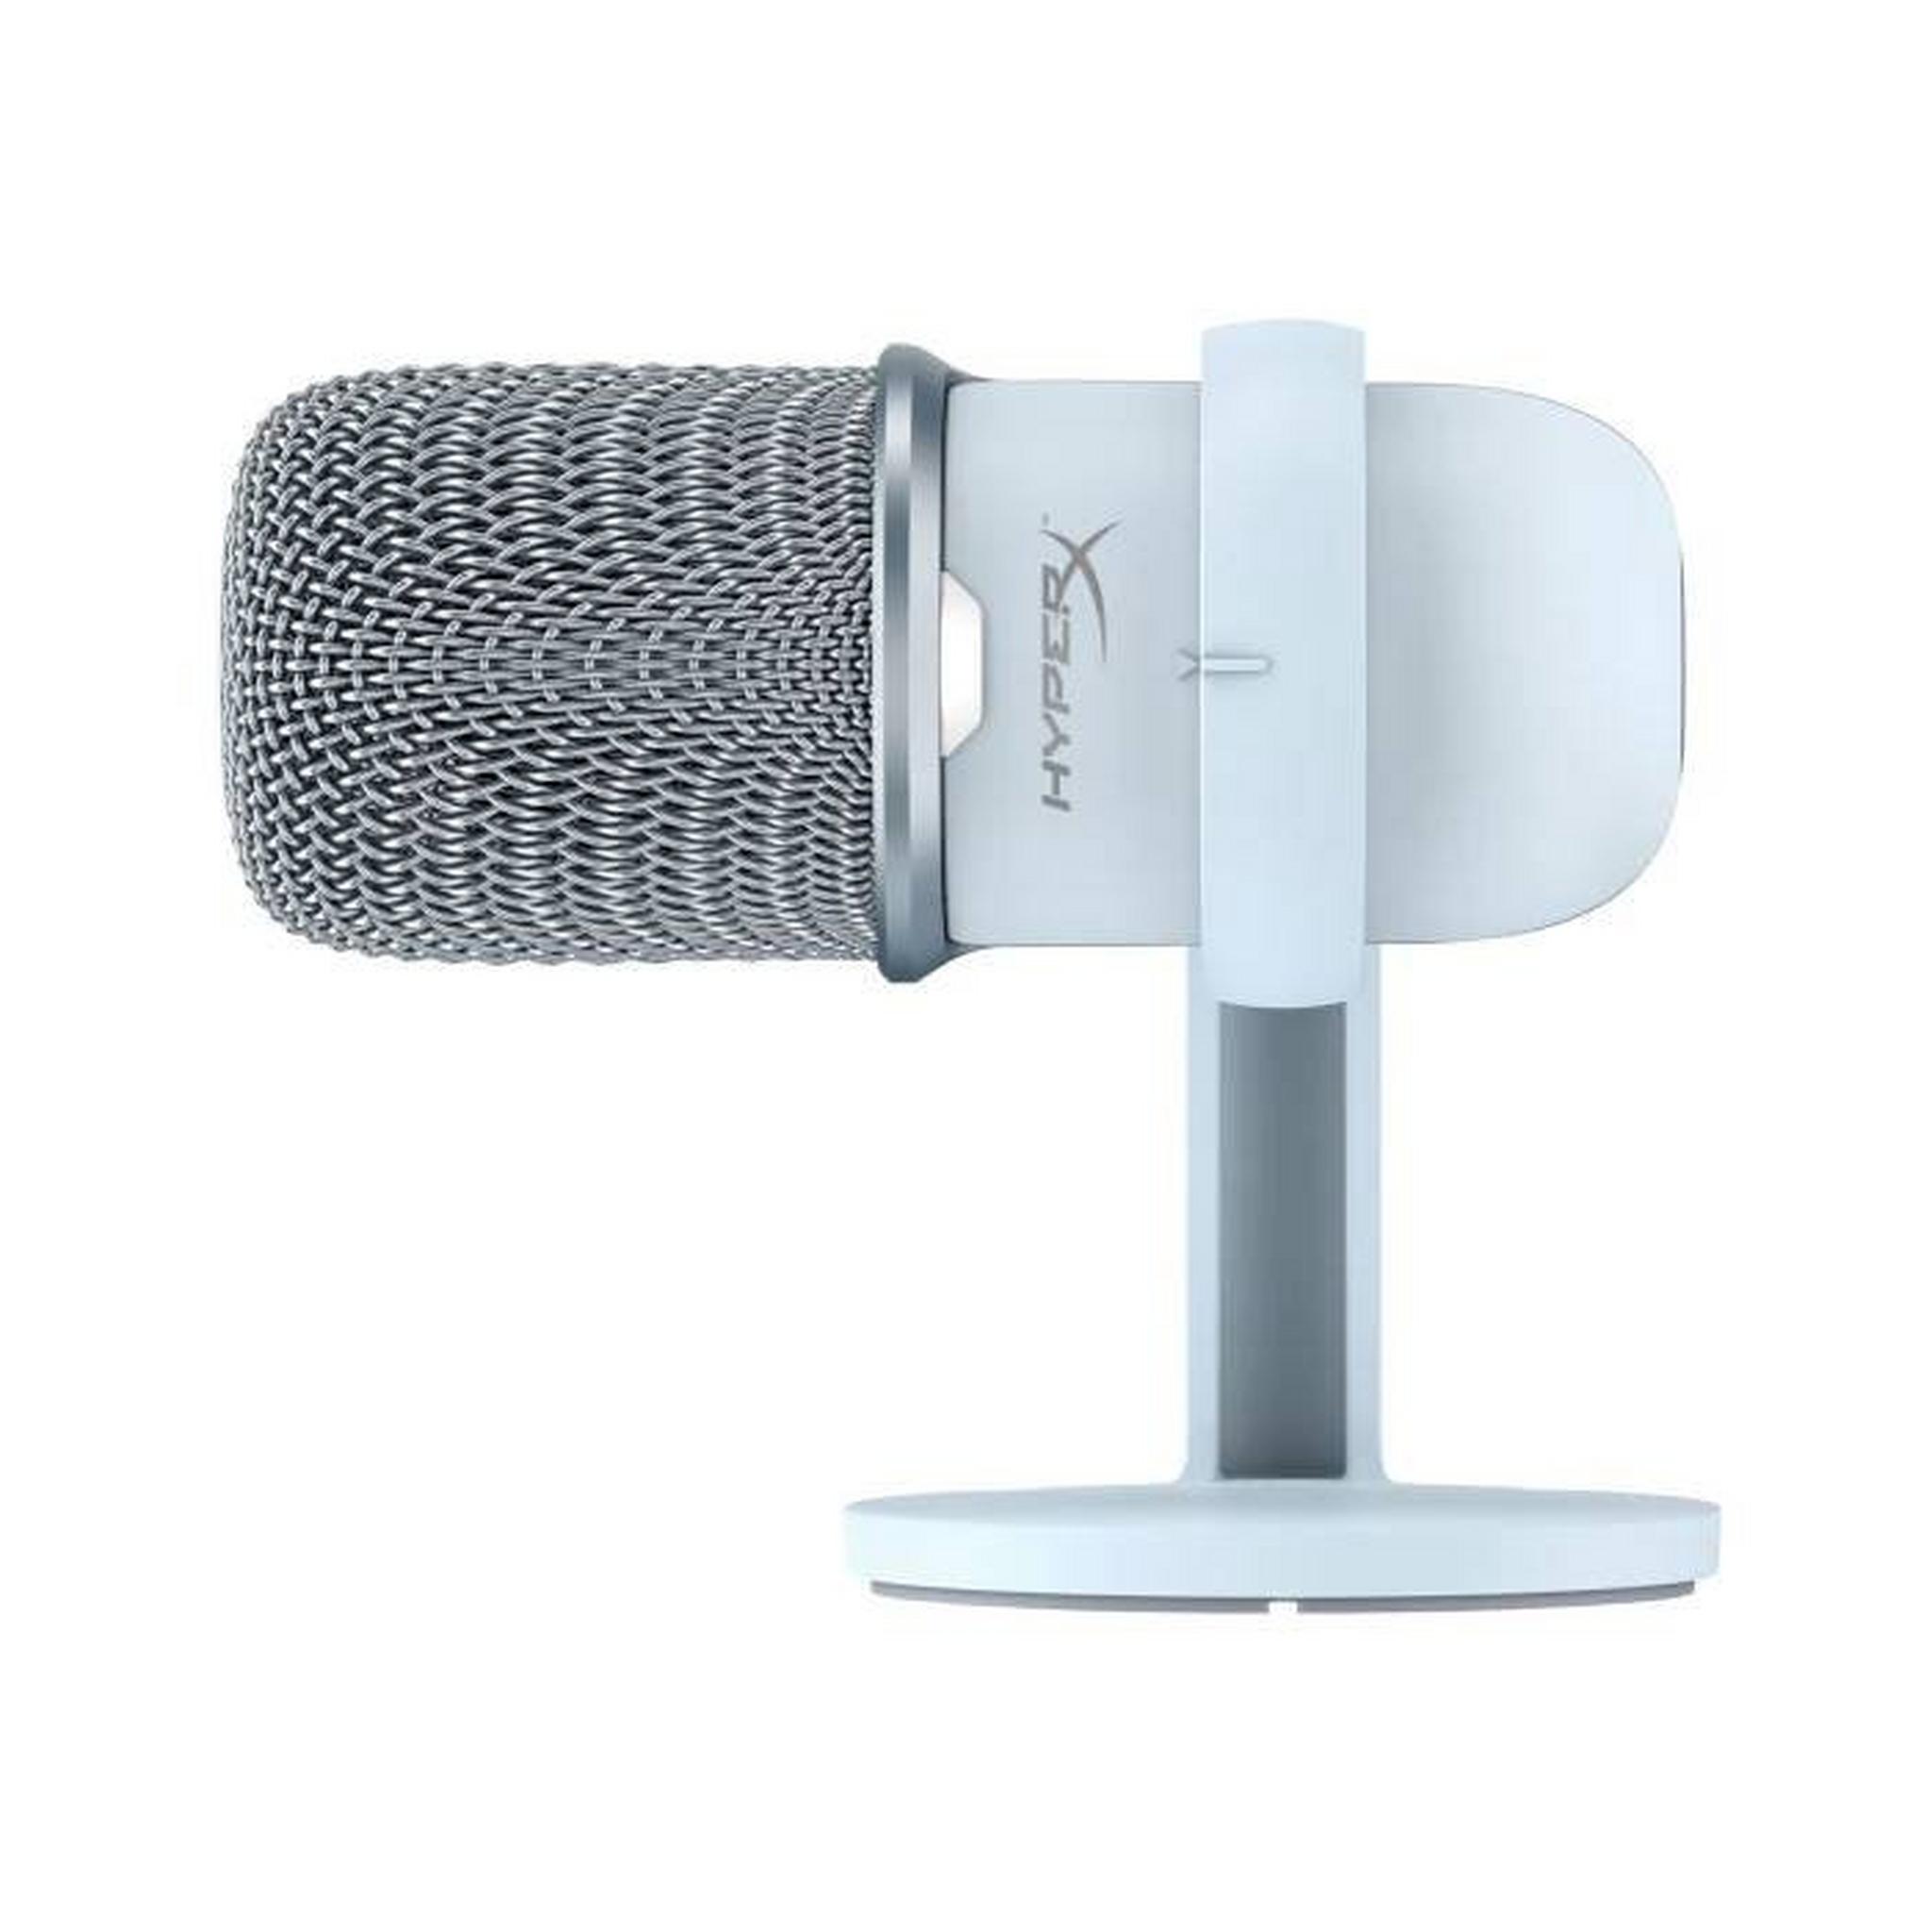 HyperX SoloCast USB Microphone – White